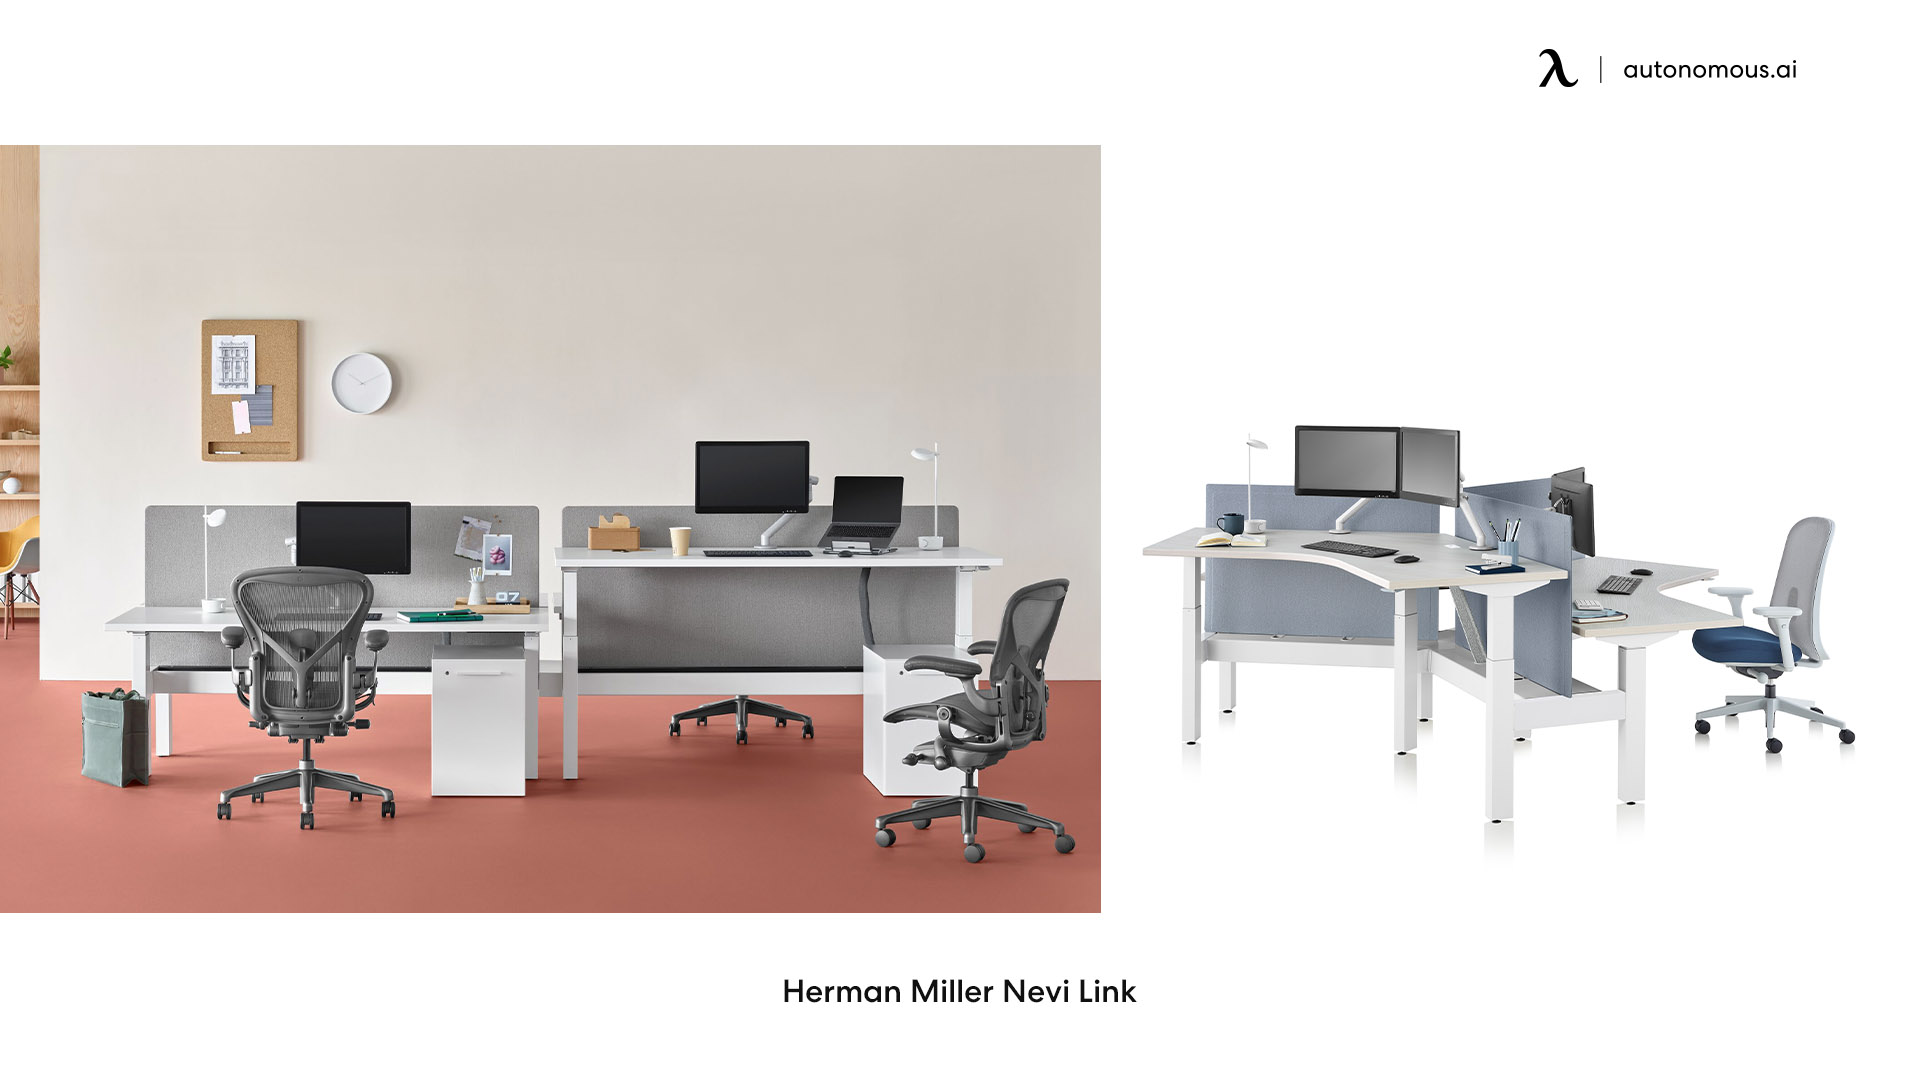 Herman Miller Nevi Link double sided desk